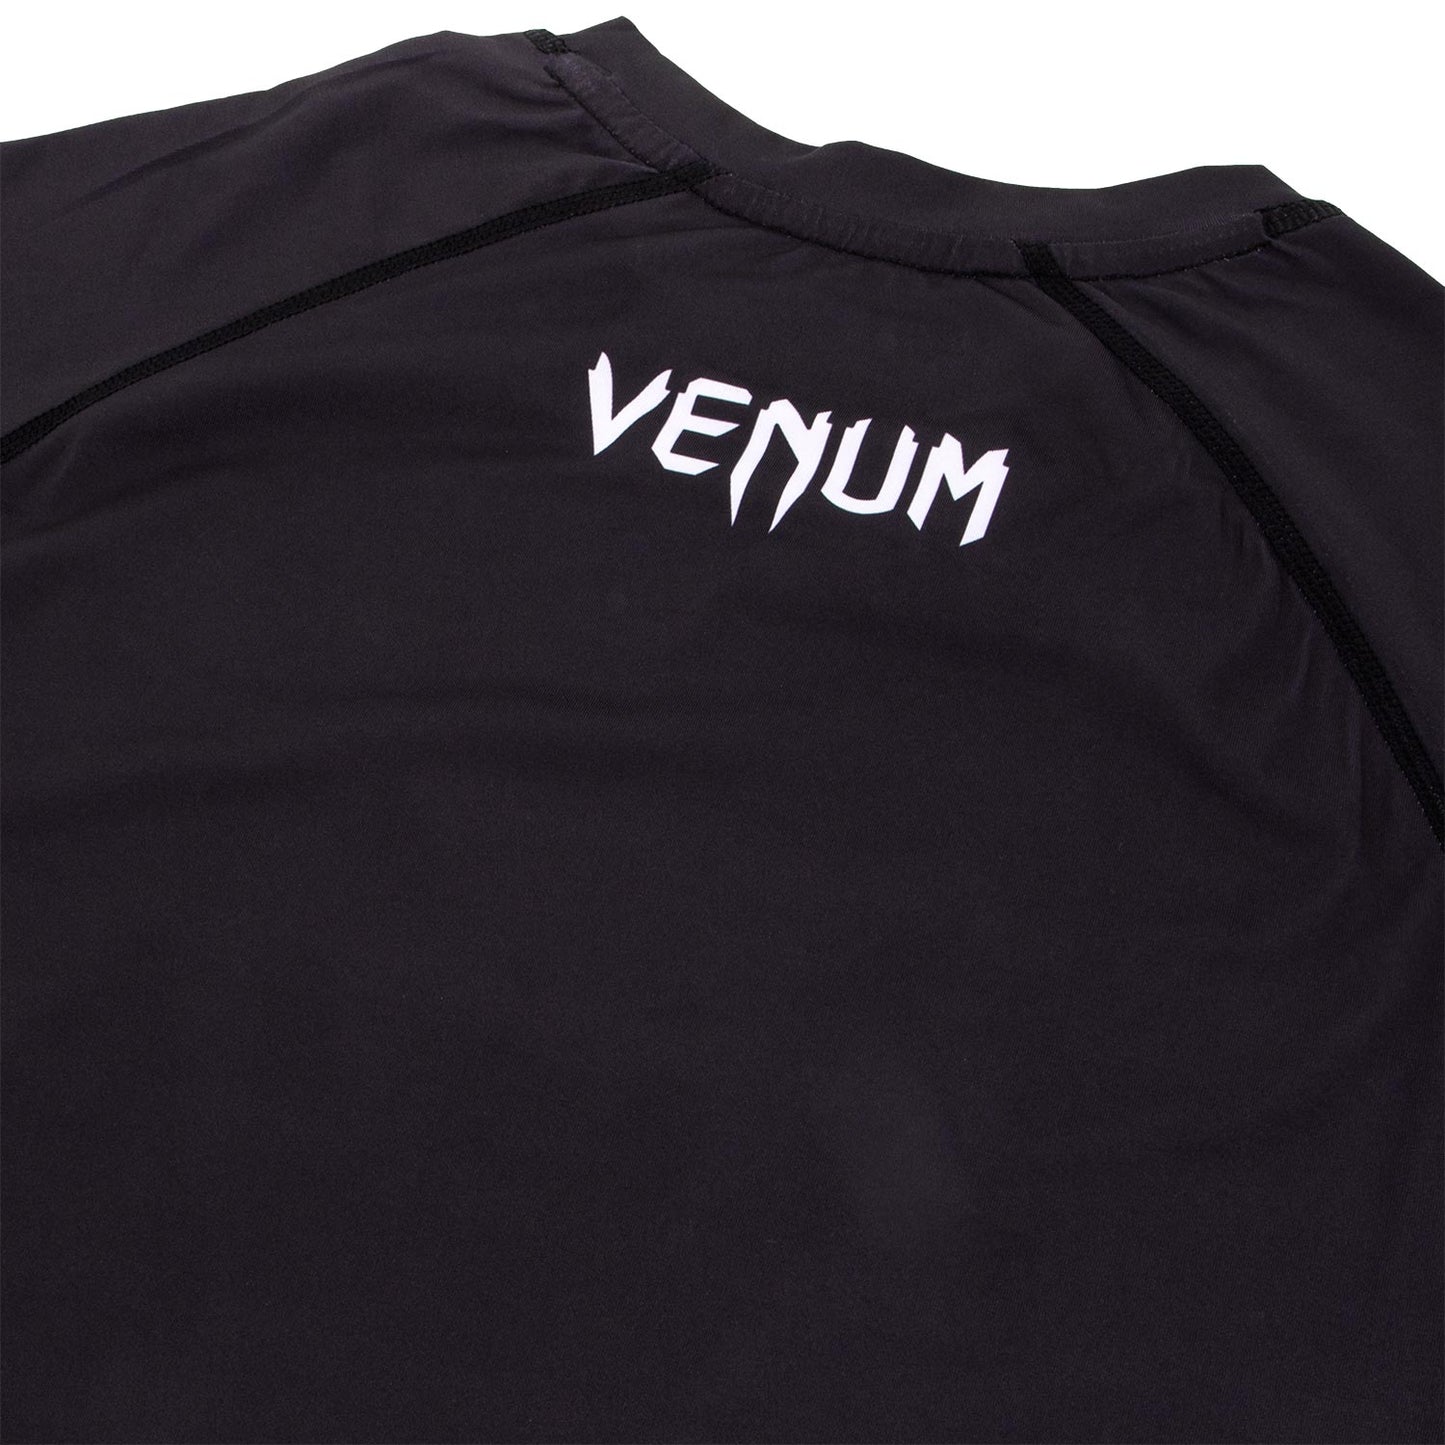 Venum Contender 3.0 Compression T-shirt - Long Sleeves - Black/White